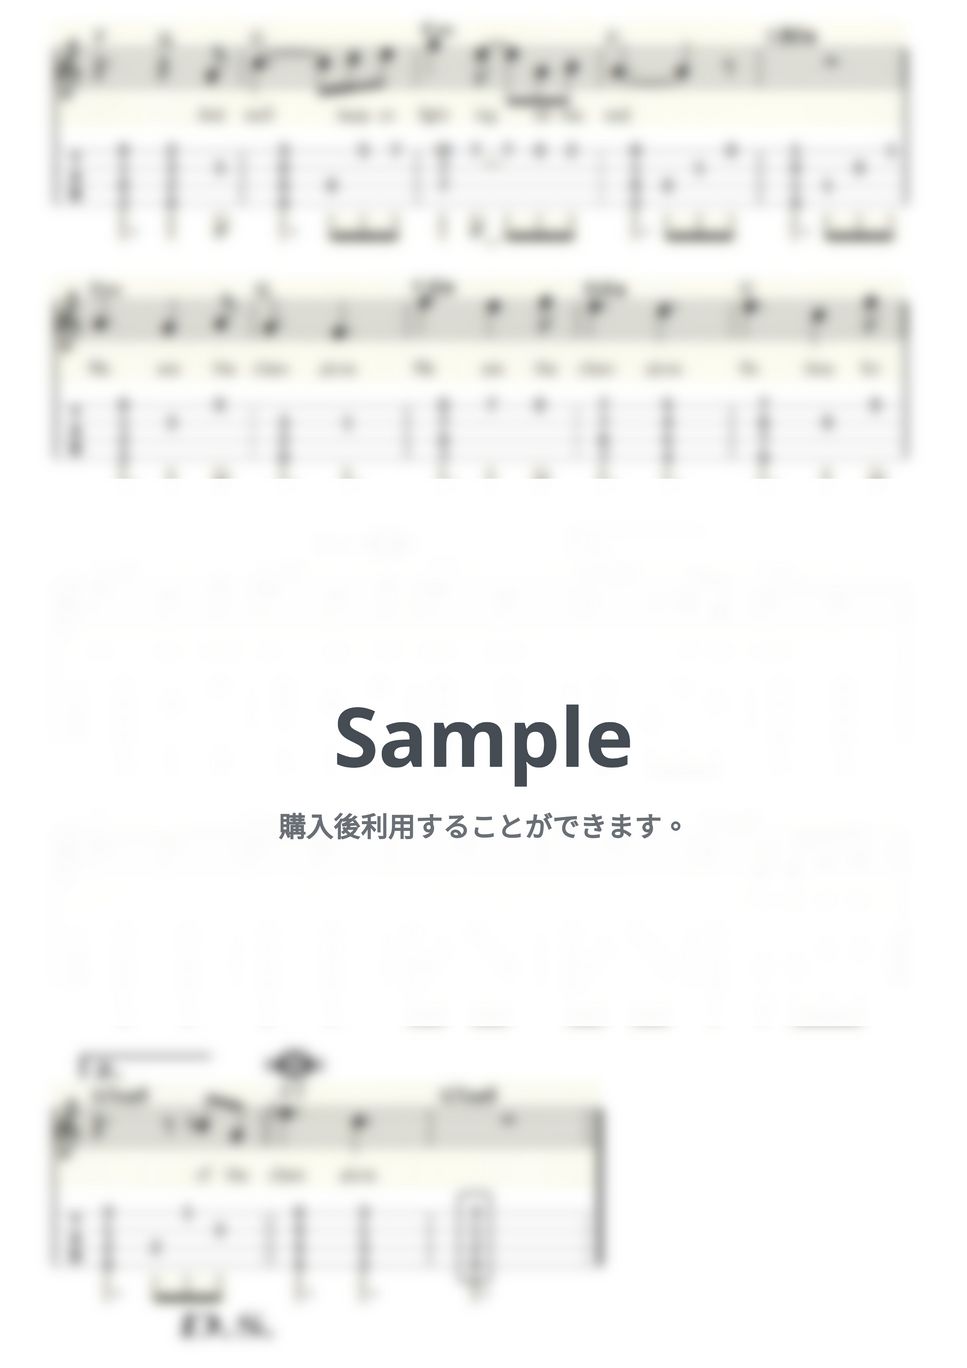 ＱＵＥＥＮ - We are the Champions (ｳｸﾚﾚｿﾛ/High-G・Low-G/中級) by ukulelepapa